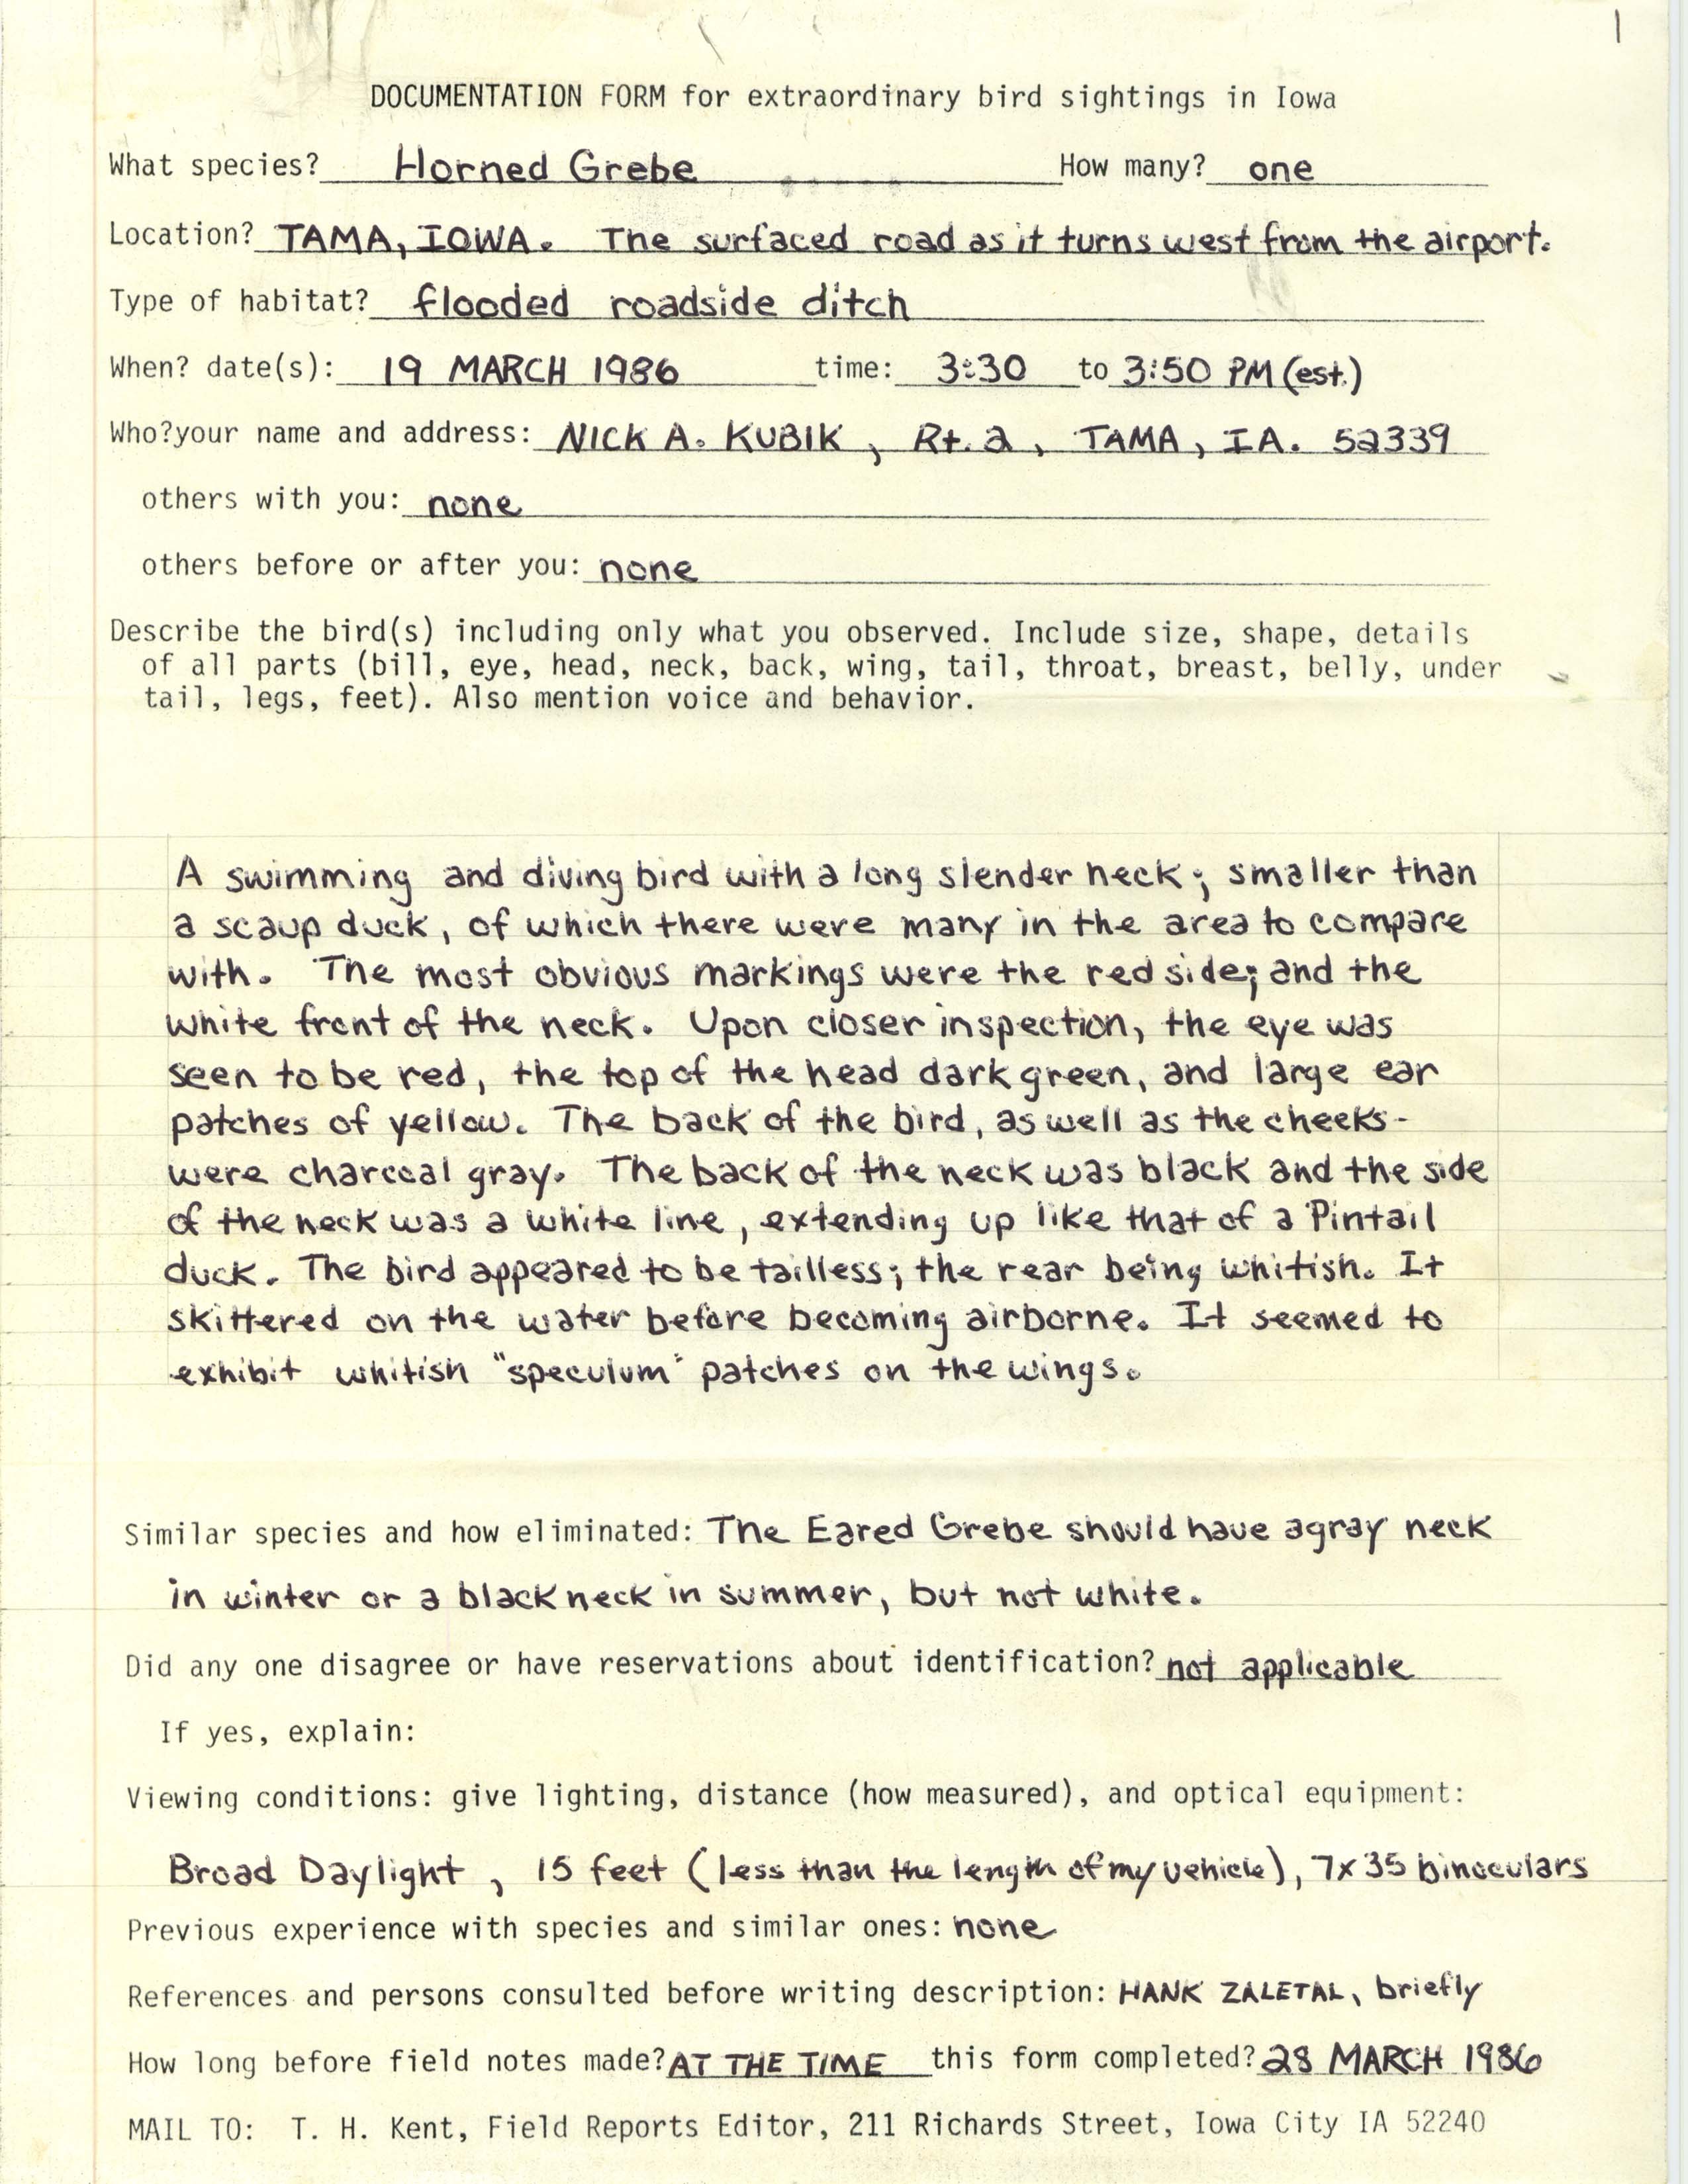 Rare bird documentation form for Horned Grebe at Tama, 1986